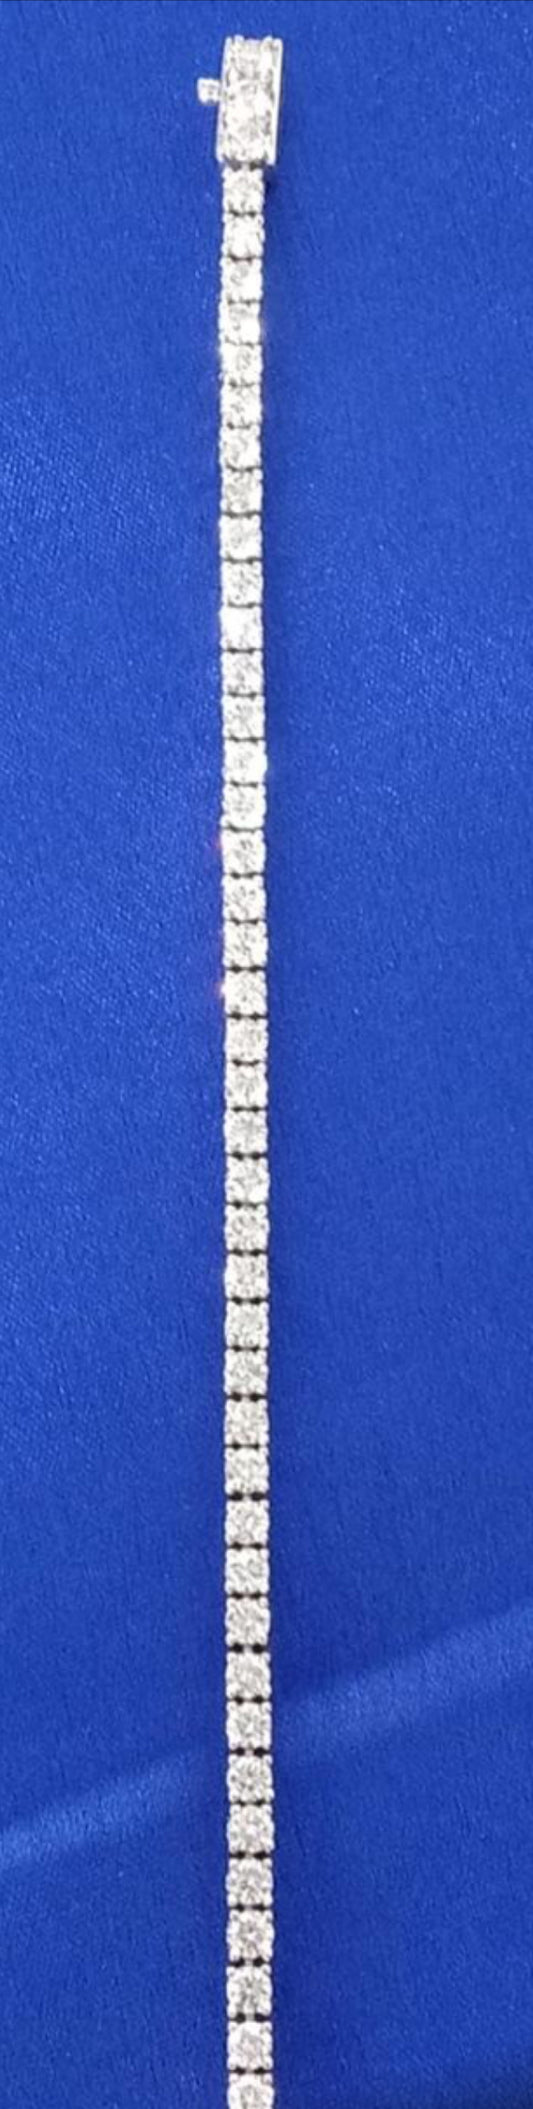 Tennis diamond bracelet